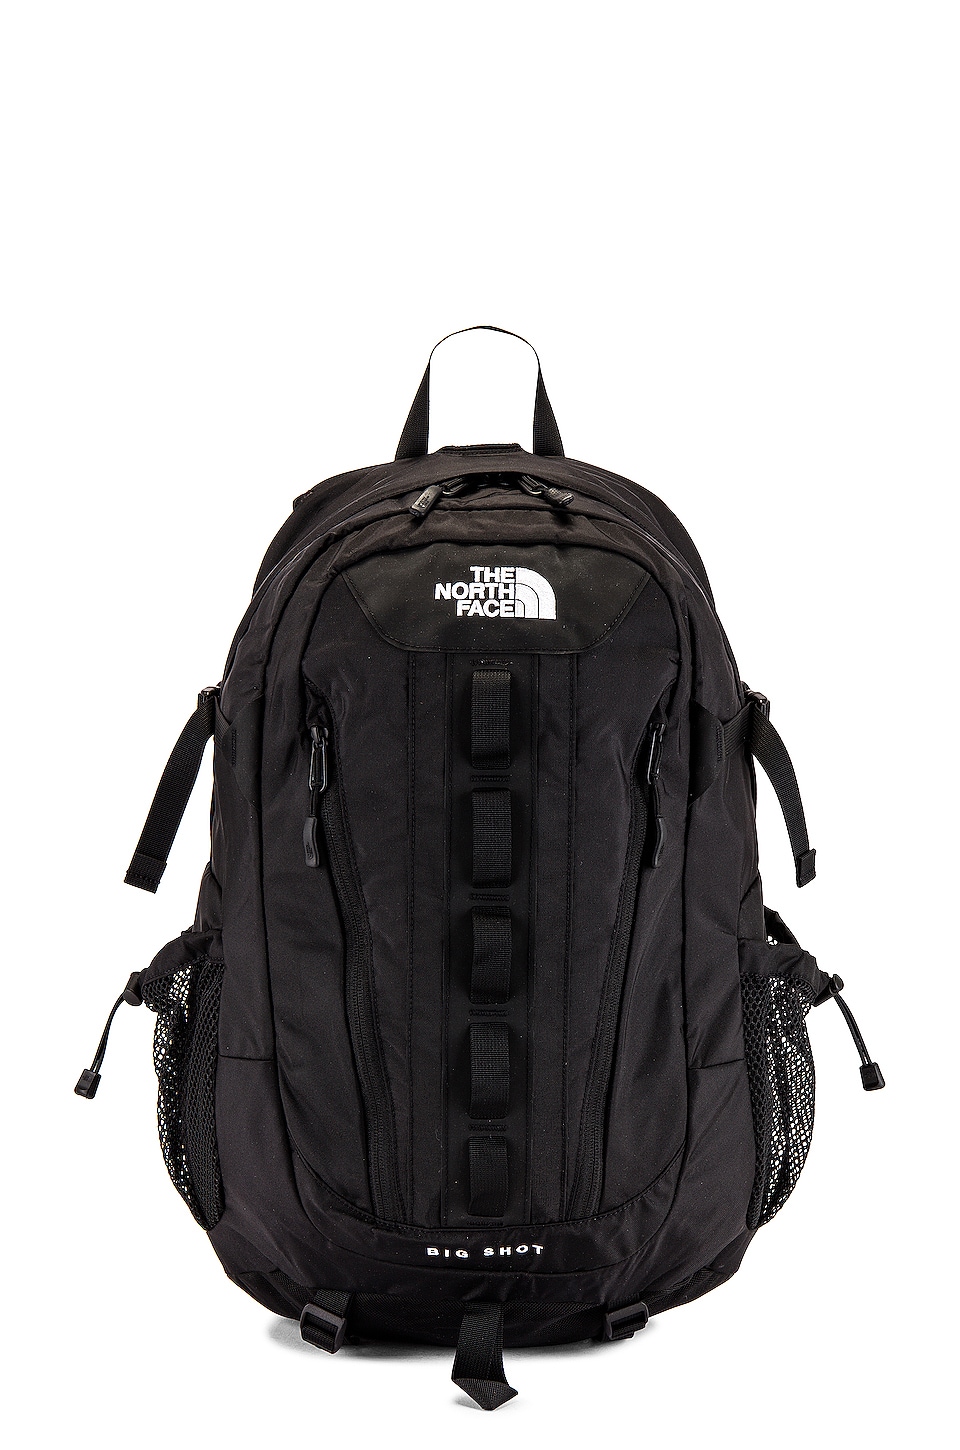 The North Face Big Shot SE Backpack in TNF Black & TNF Black | REVOLVE